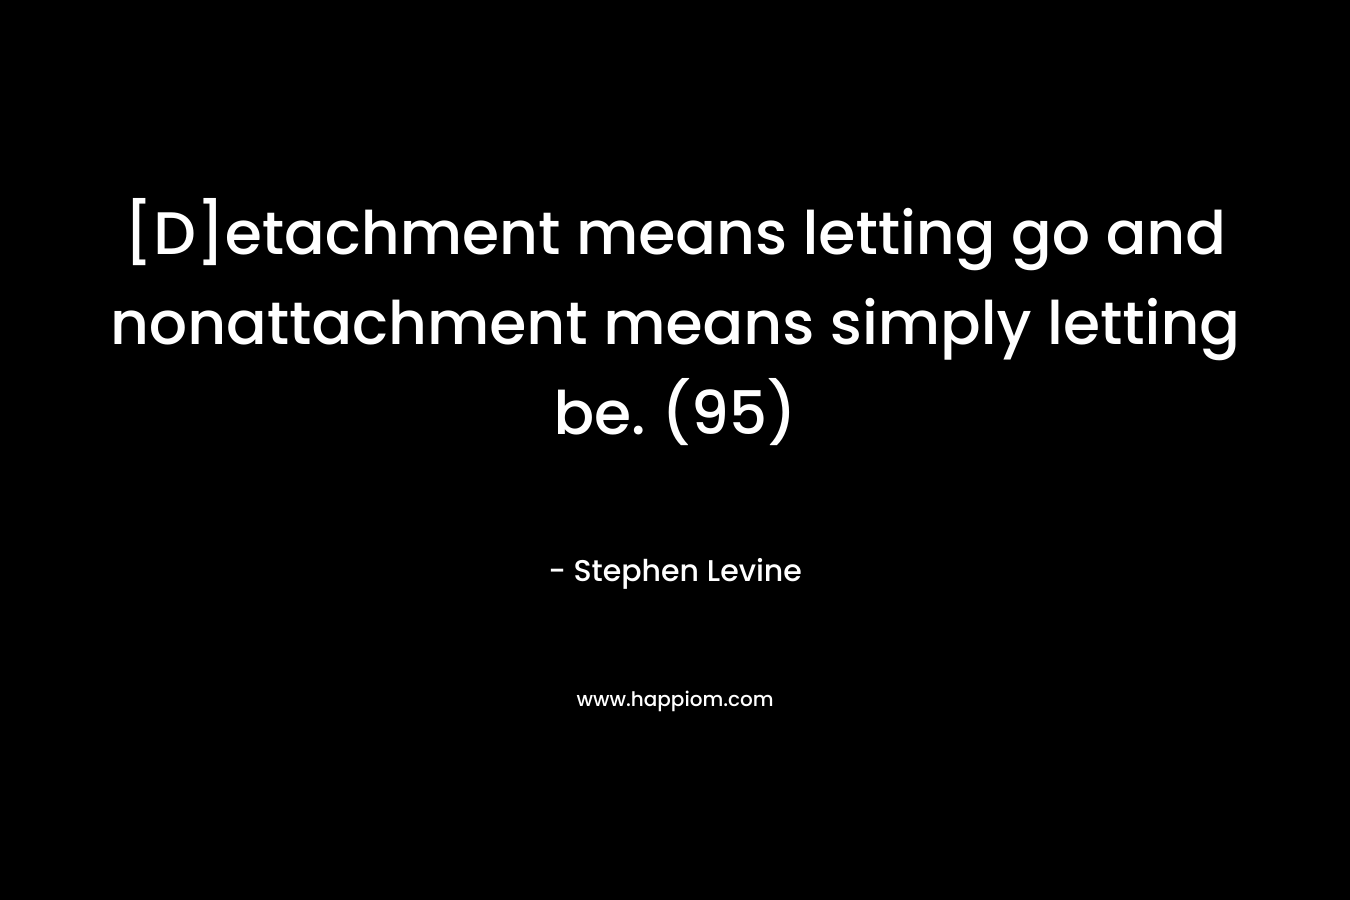 [D]etachment means letting go and nonattachment means simply letting be. (95)